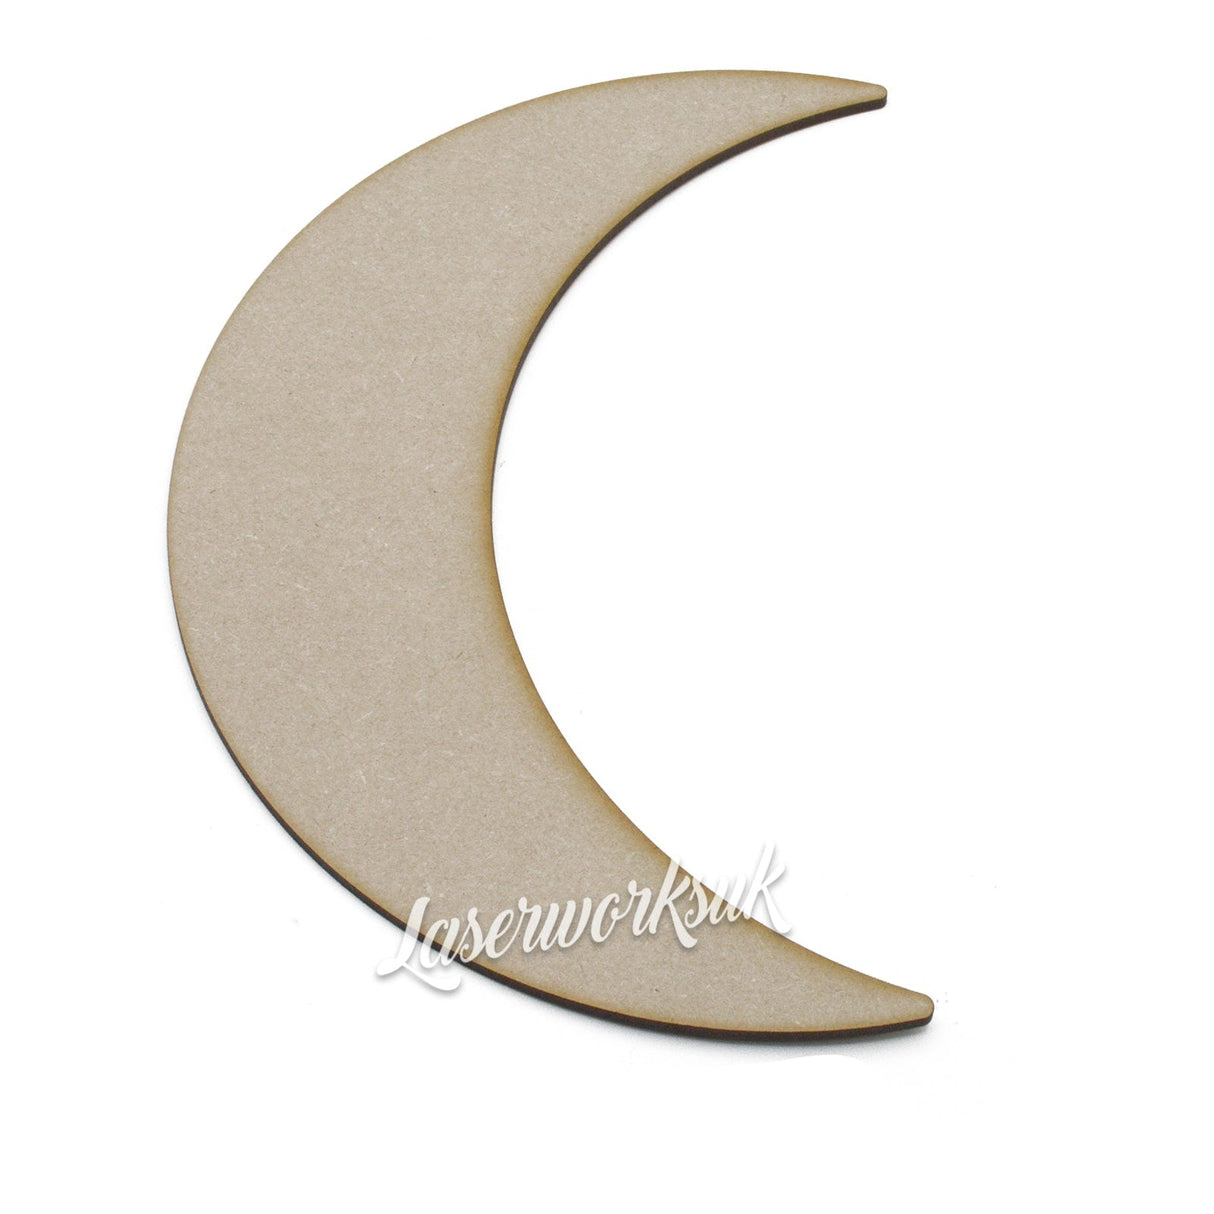 Crescent Moon Craft shapes - Laserworksuk